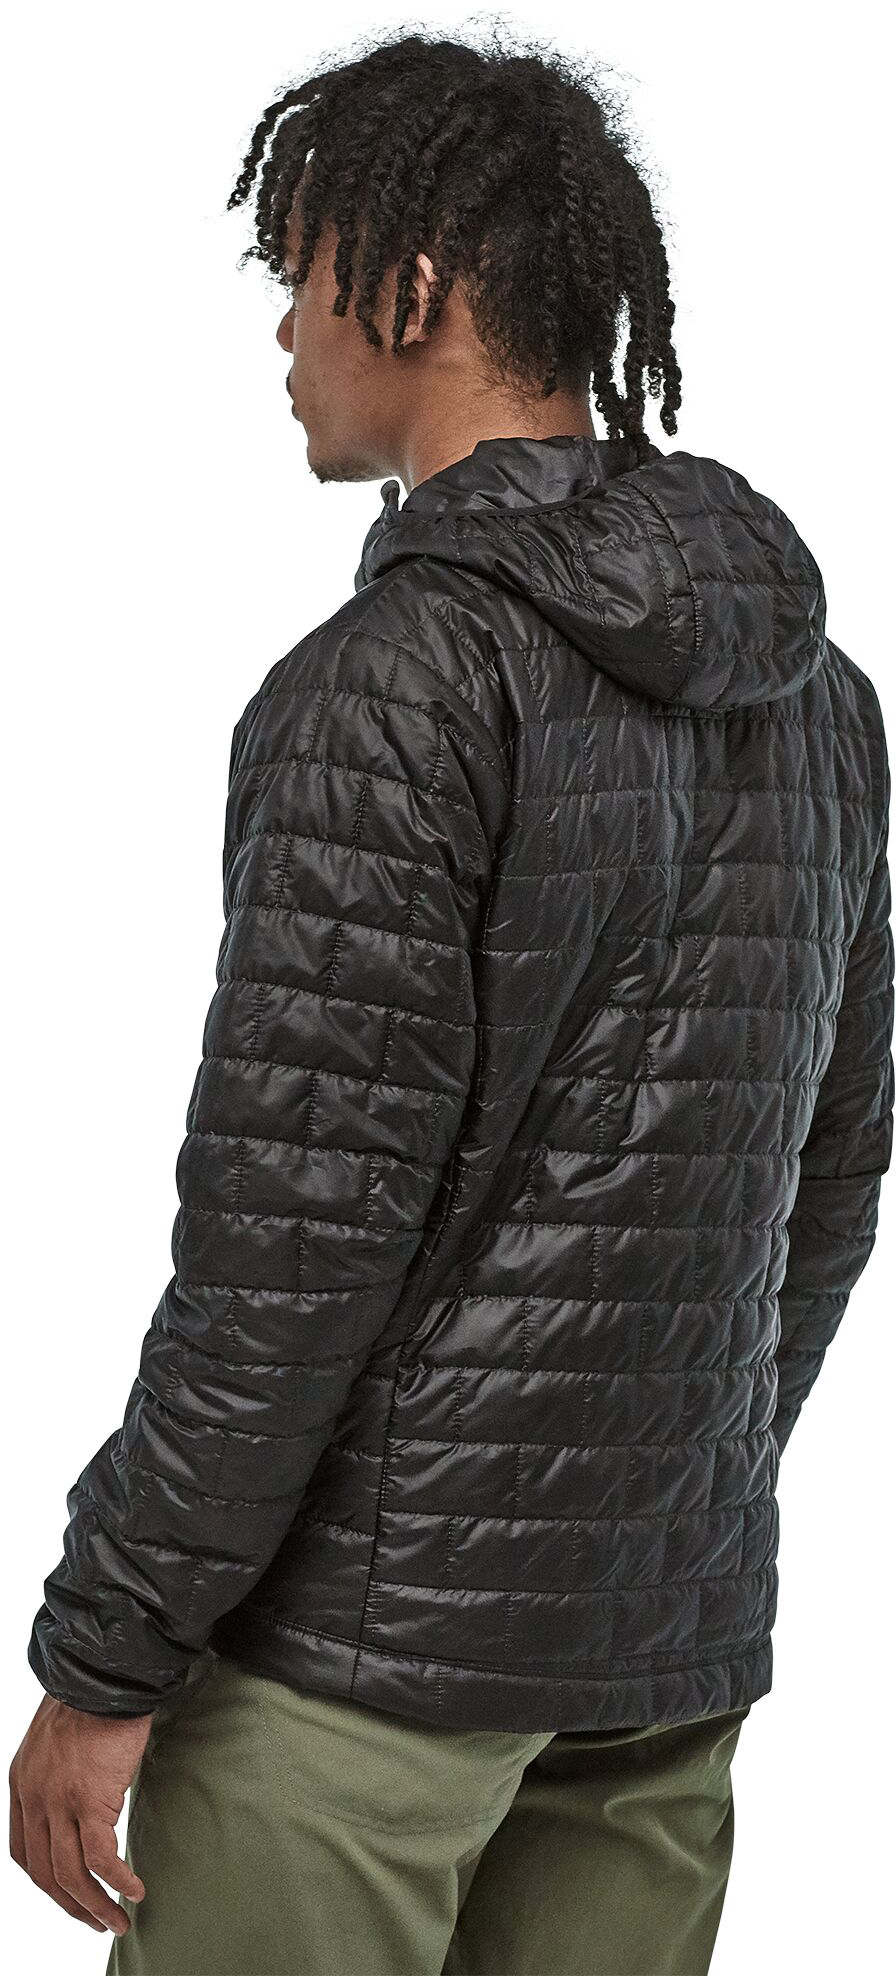 Patagonia Nano Puff Hoody Insulated Jacket